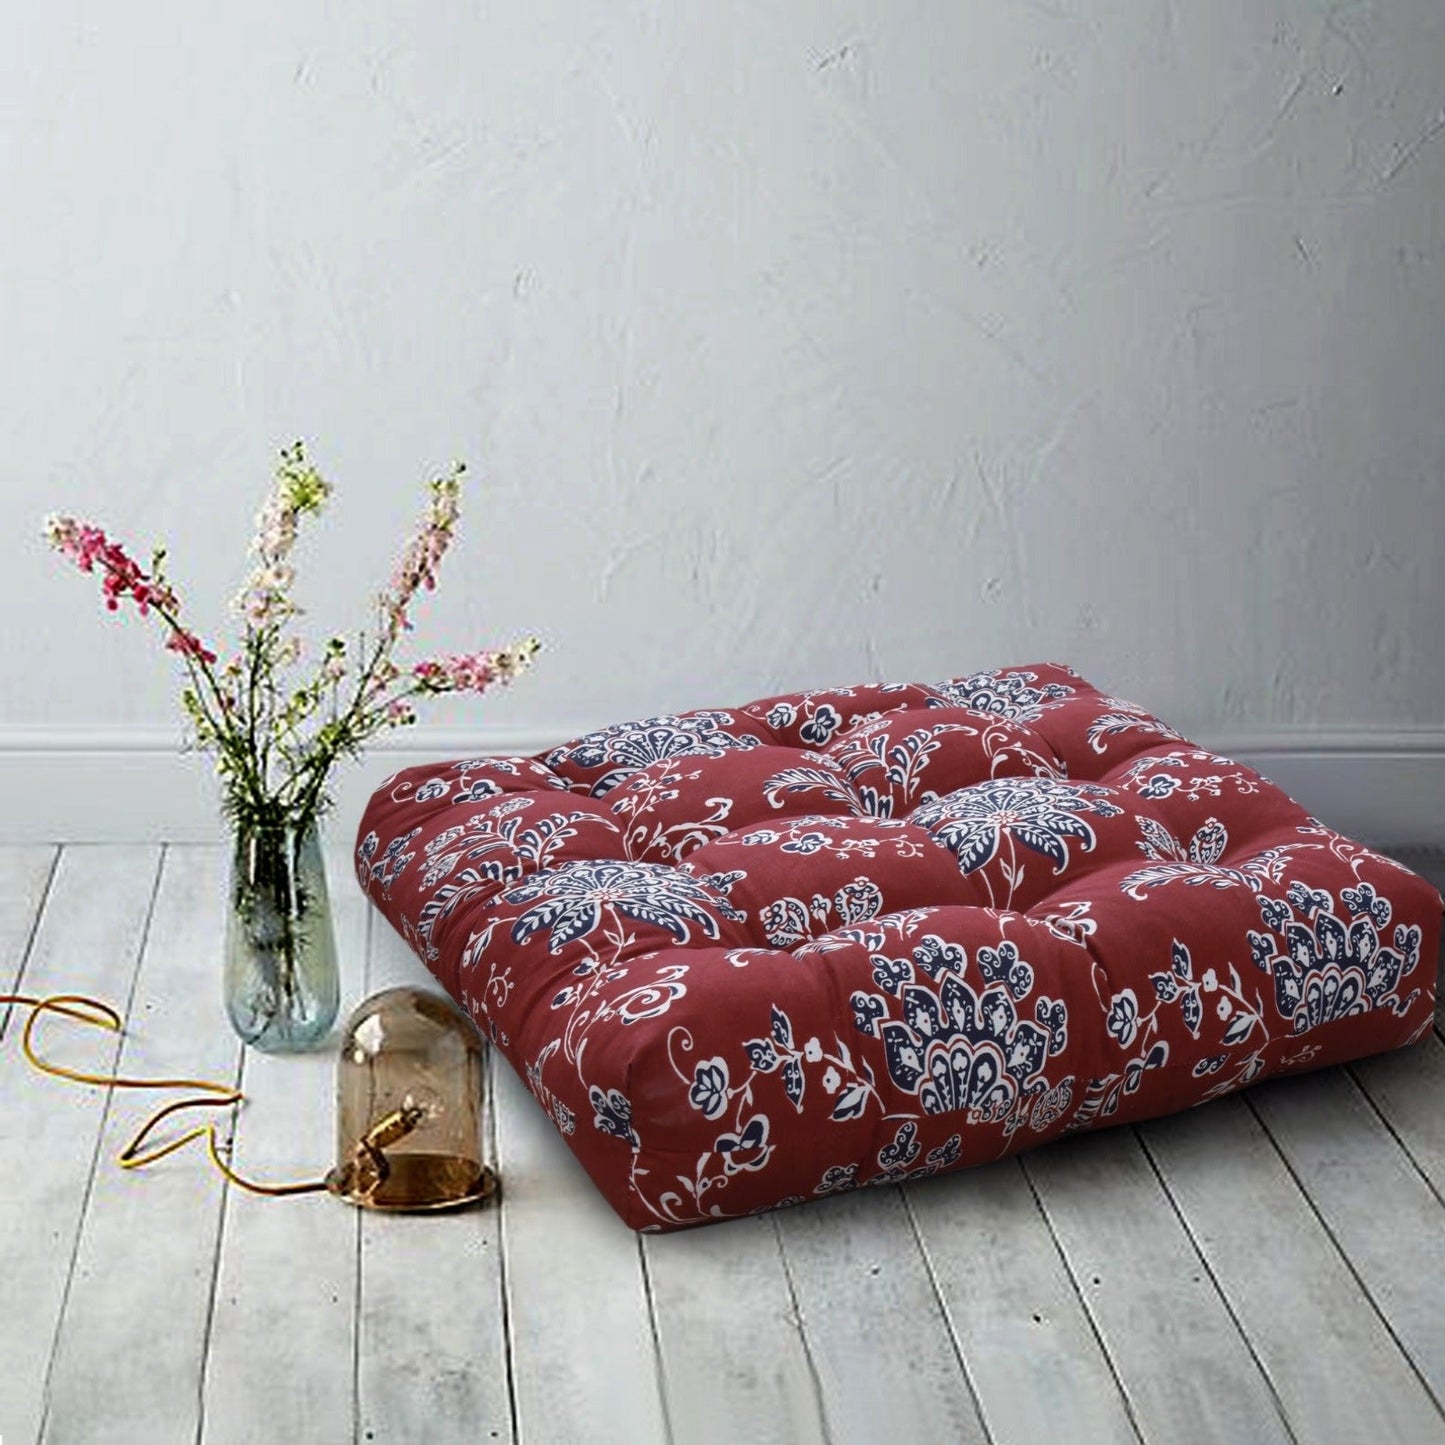 Digital Printed Square Floor Cushions- Maroon Floral